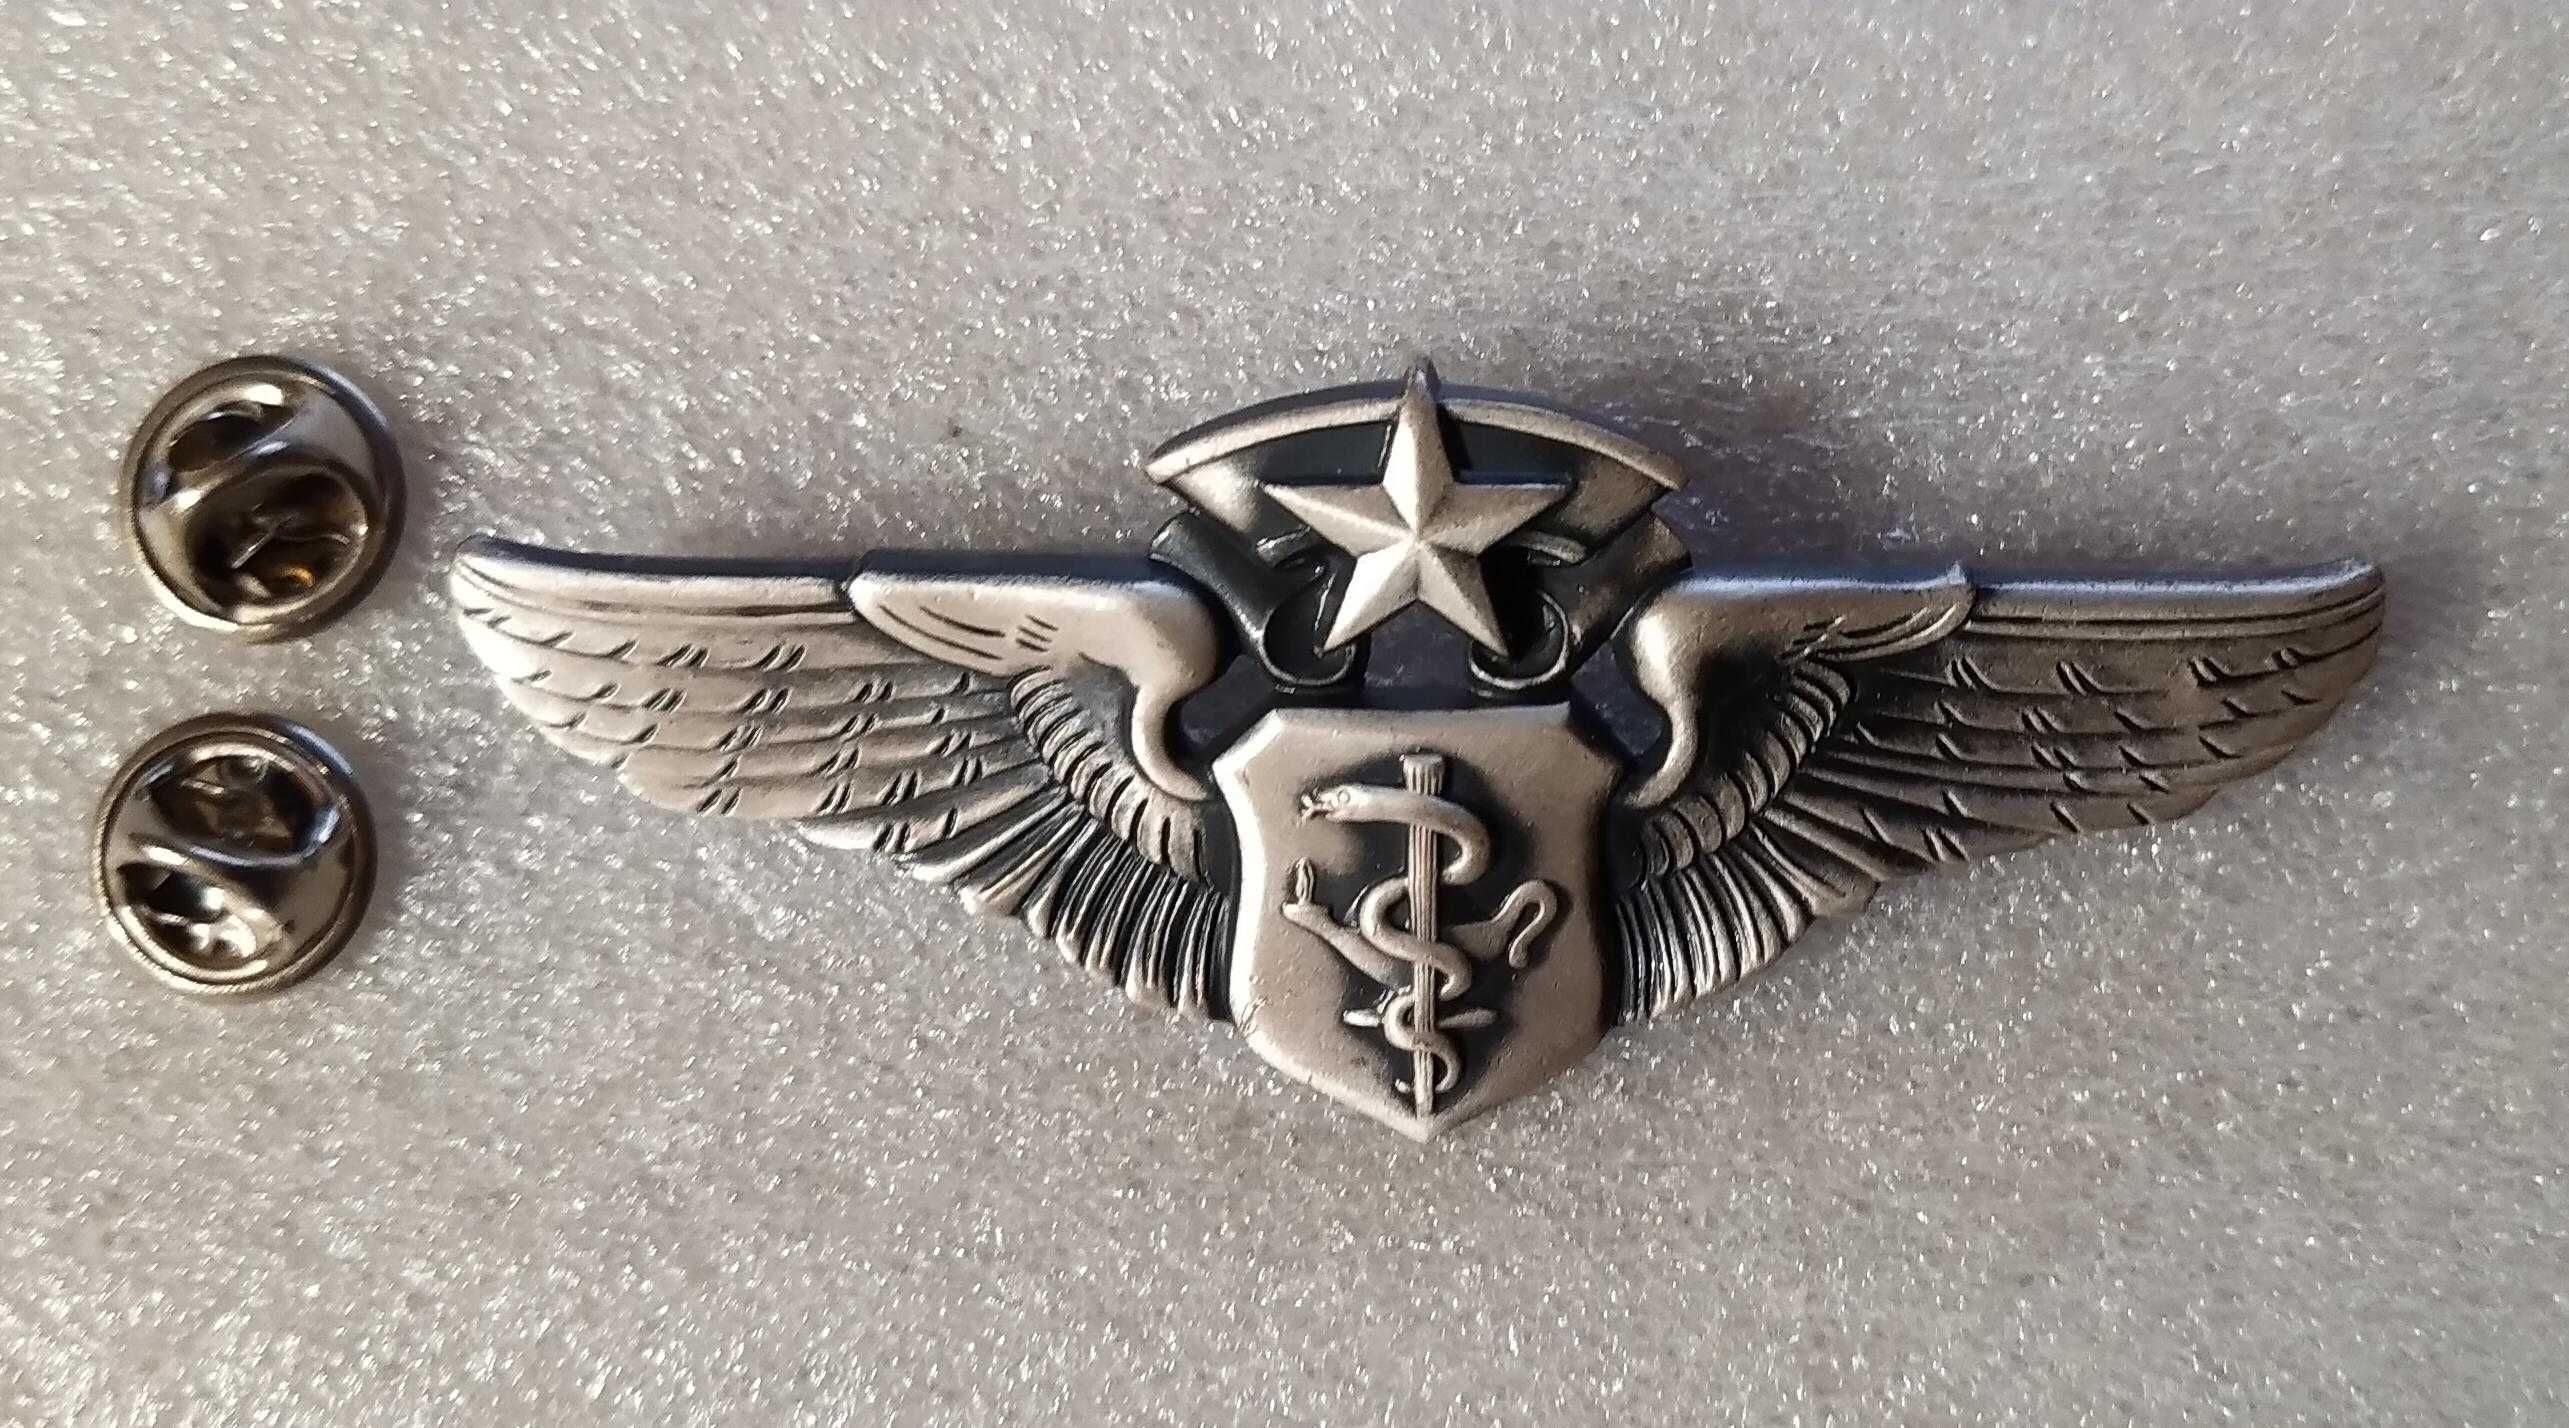 Значок USAF - Chief Flight Nurse Badge (Full-Size)  - USA (США)